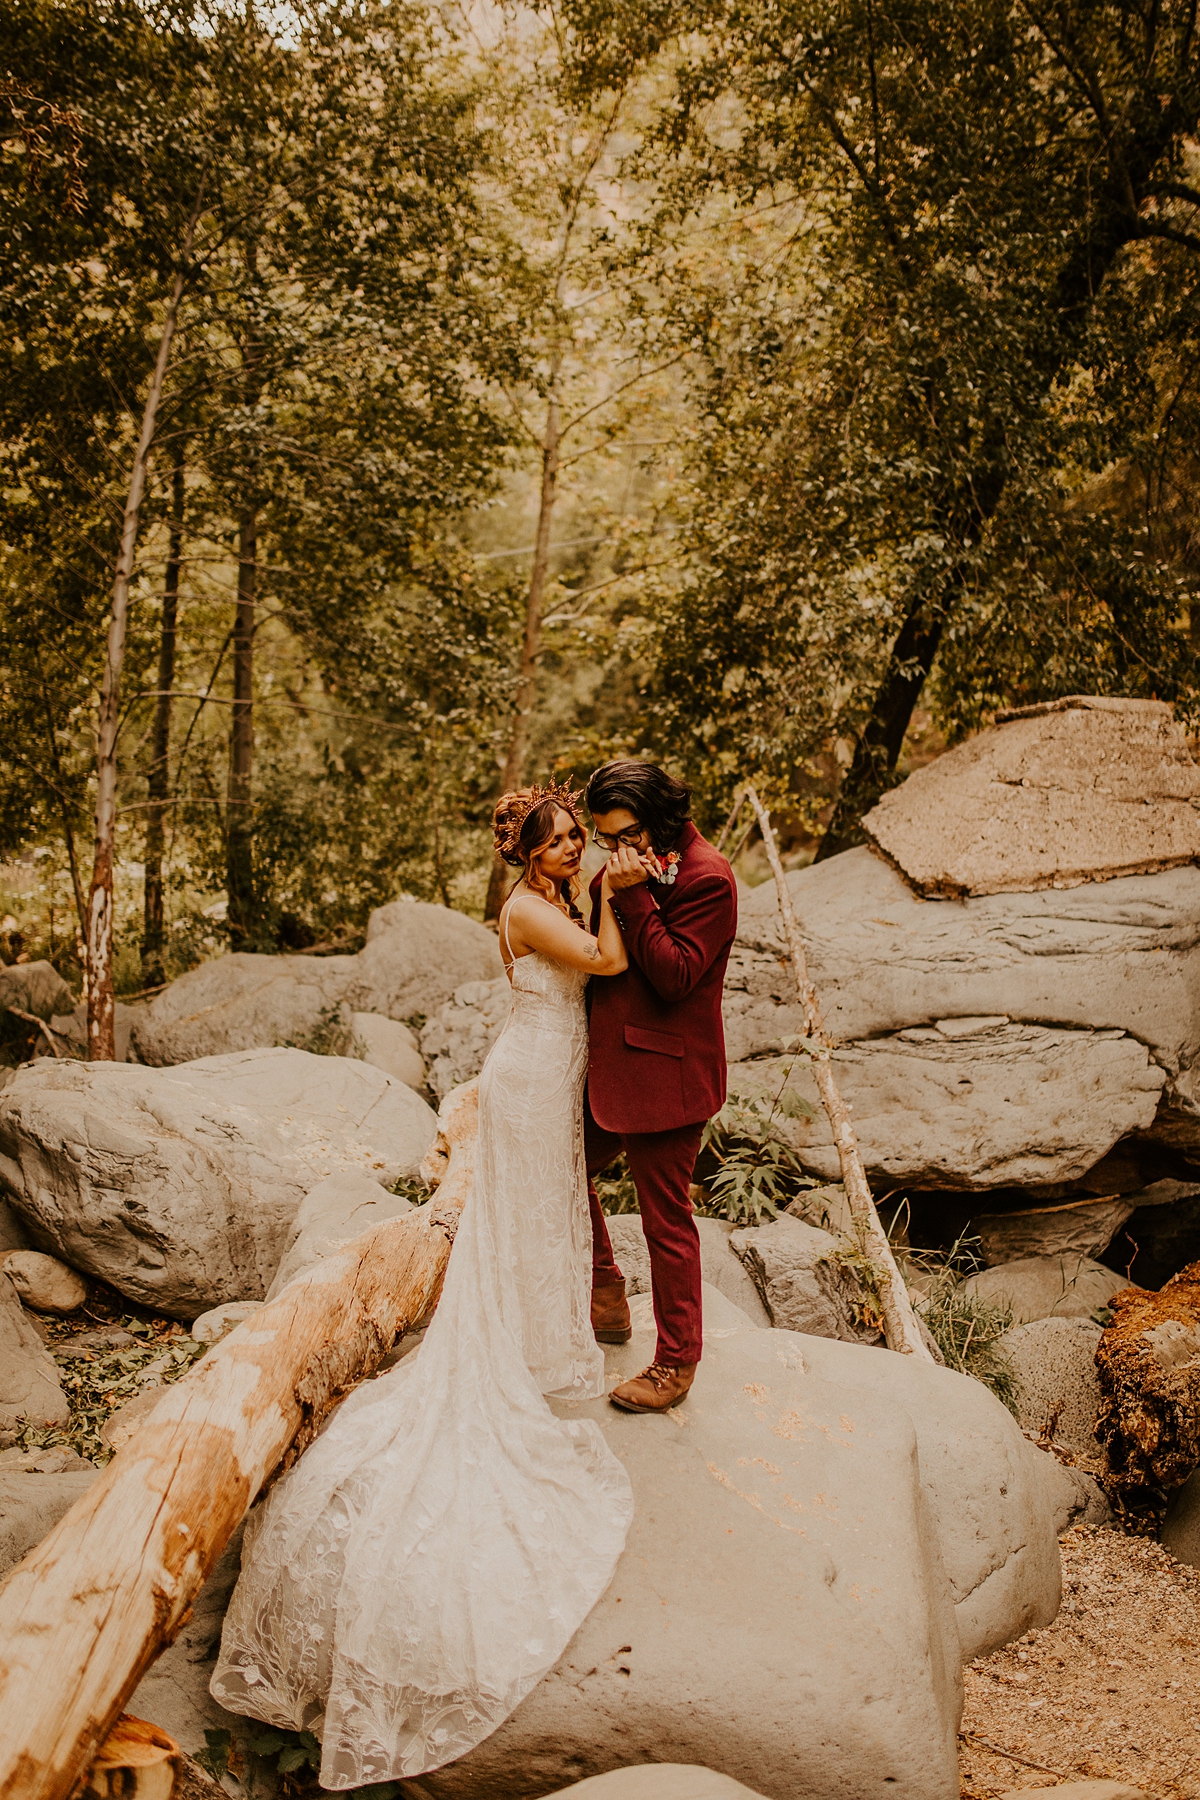 woodsy-intimate-wedding-at-oak-creek-allison-aslater-photography47.jpg